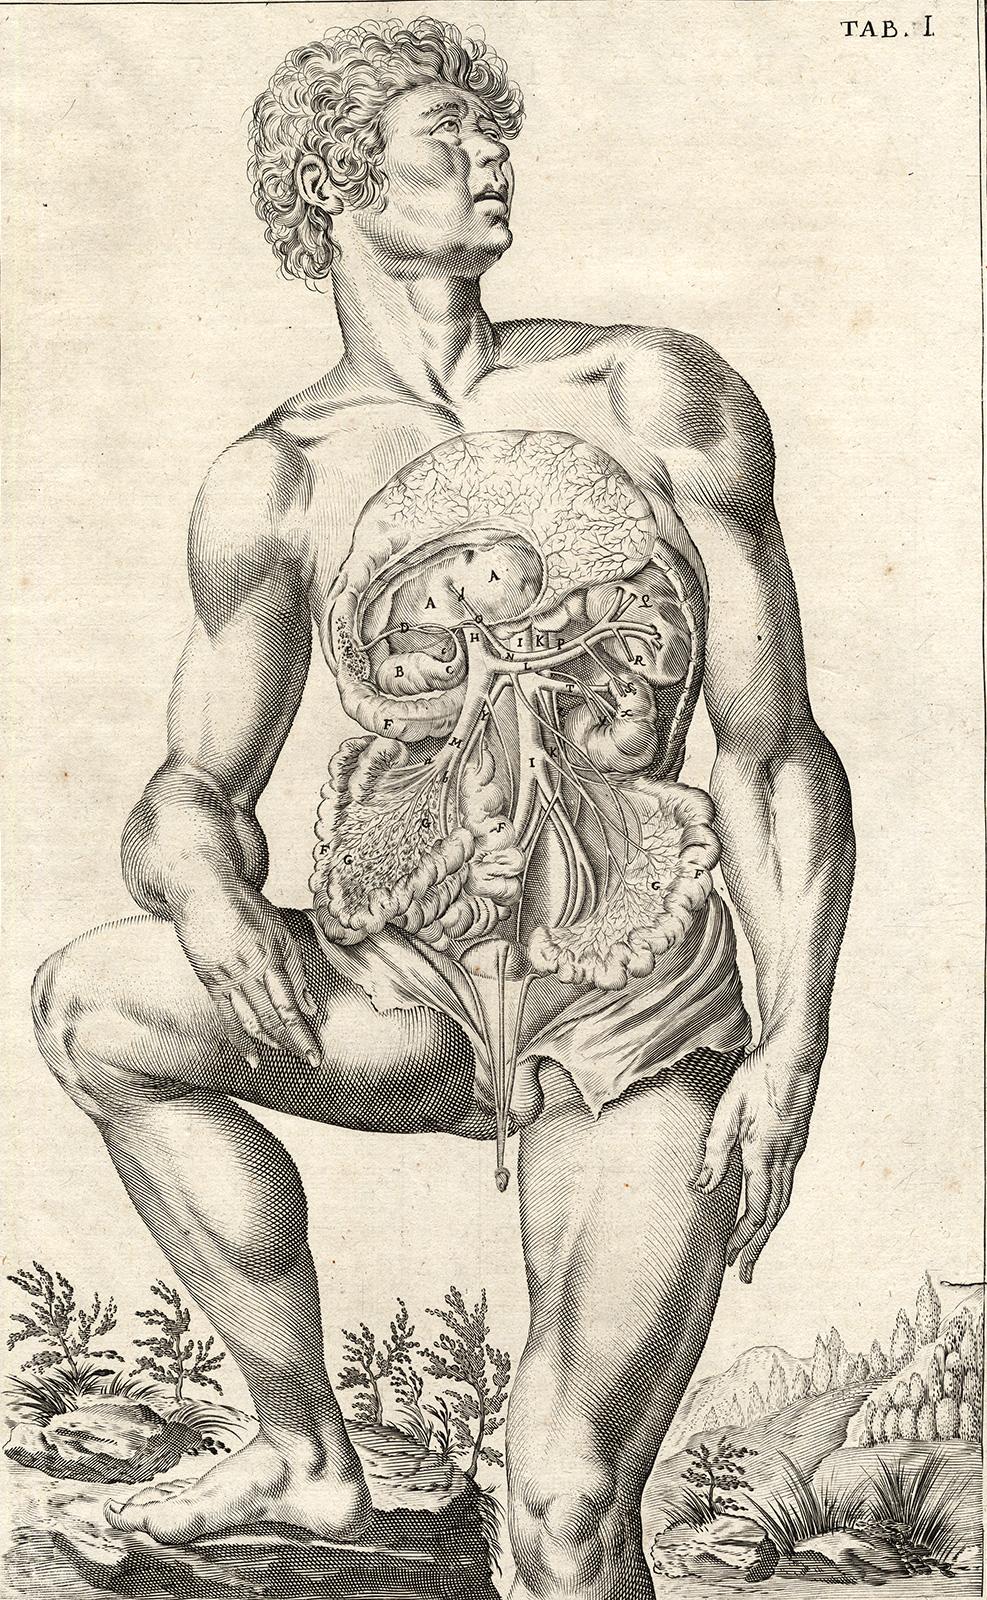 Rare anatomical print - Male abdomen by Spigelius - Engraving - 17th century - Print by Adrianus Spigelius